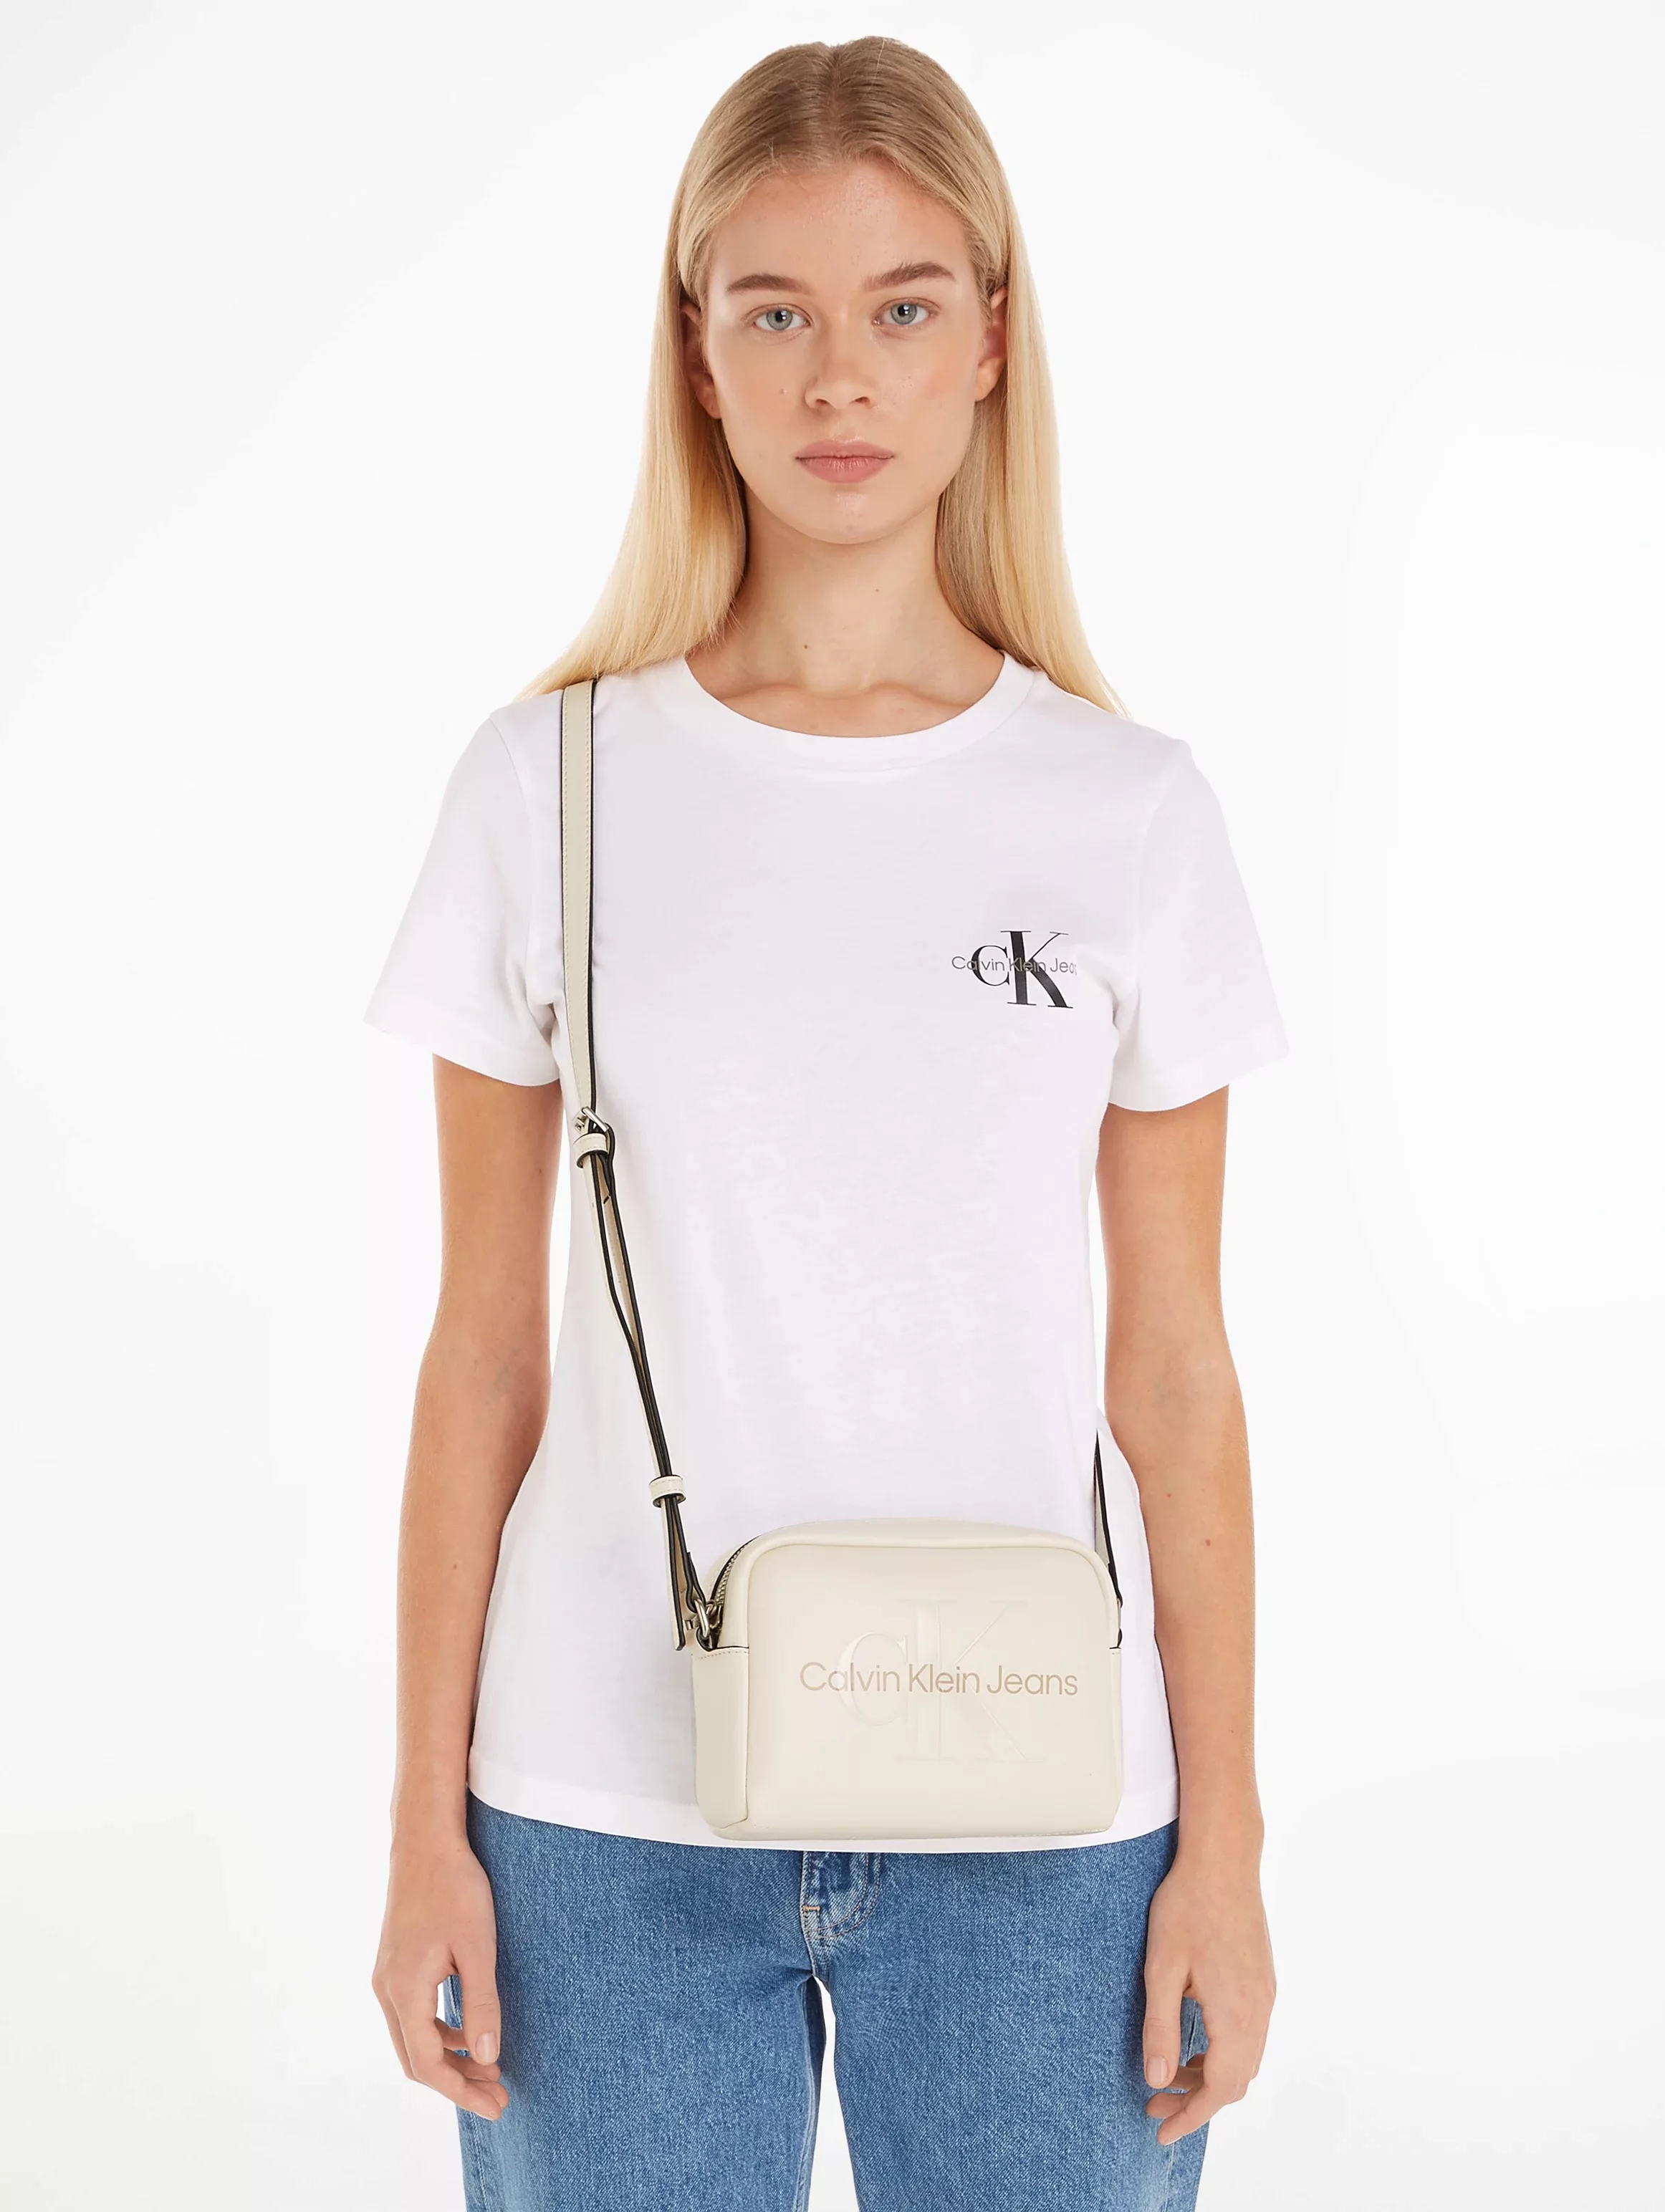 Calvin Klein Jeans Umhängetasche "SCULPTED CAMERA BAG18 MONO", Citbag Cross günstig online kaufen